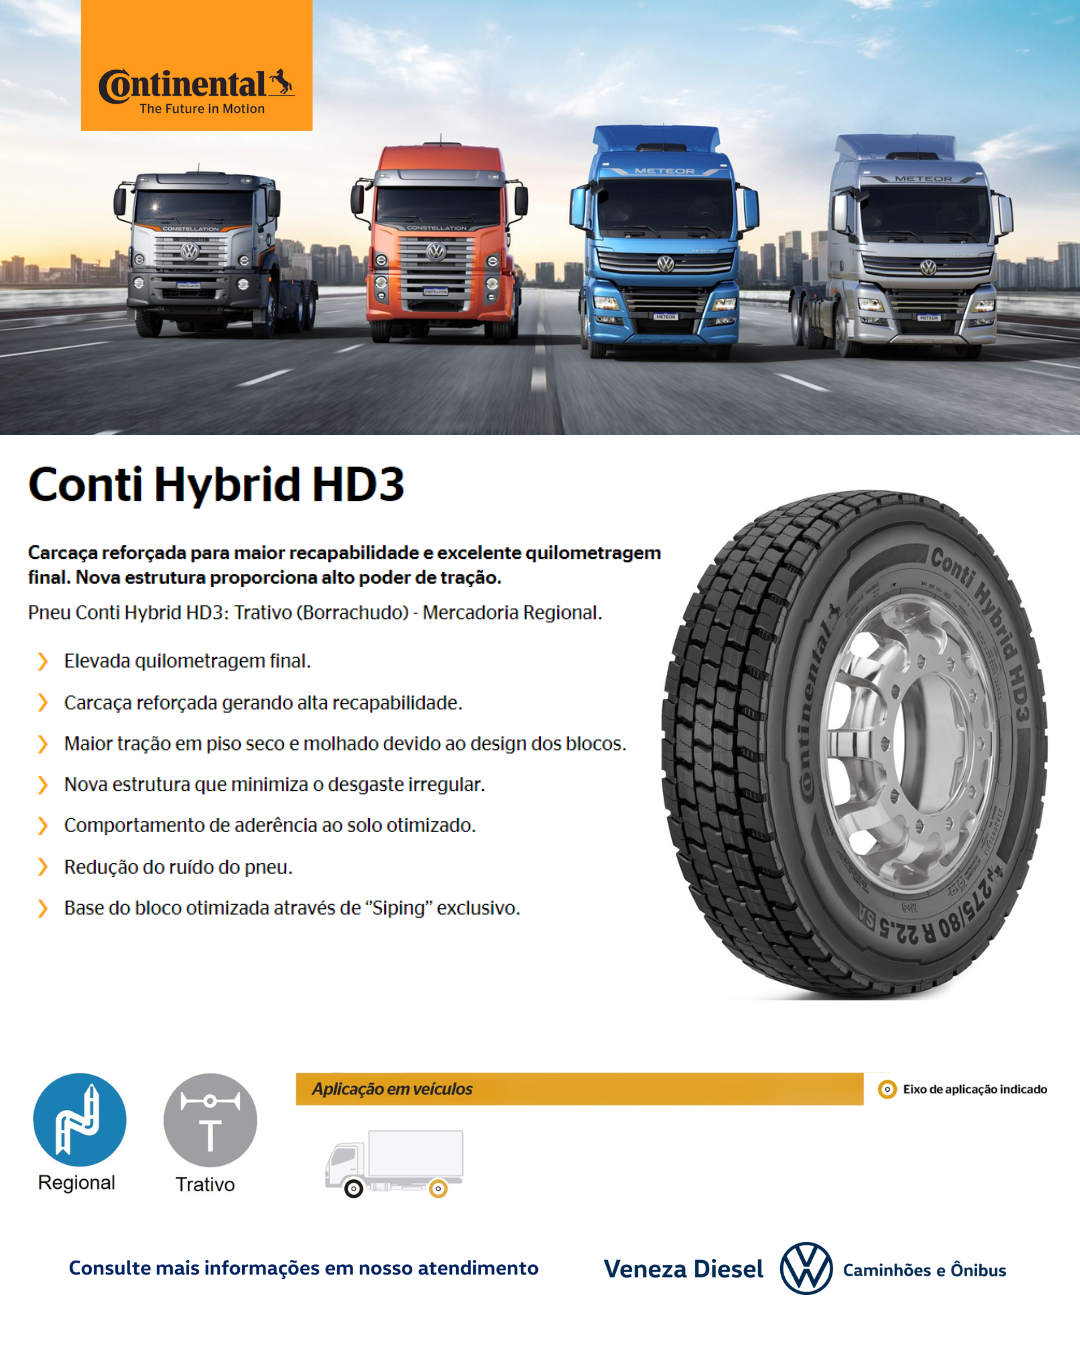 Conti Hybrid HD3